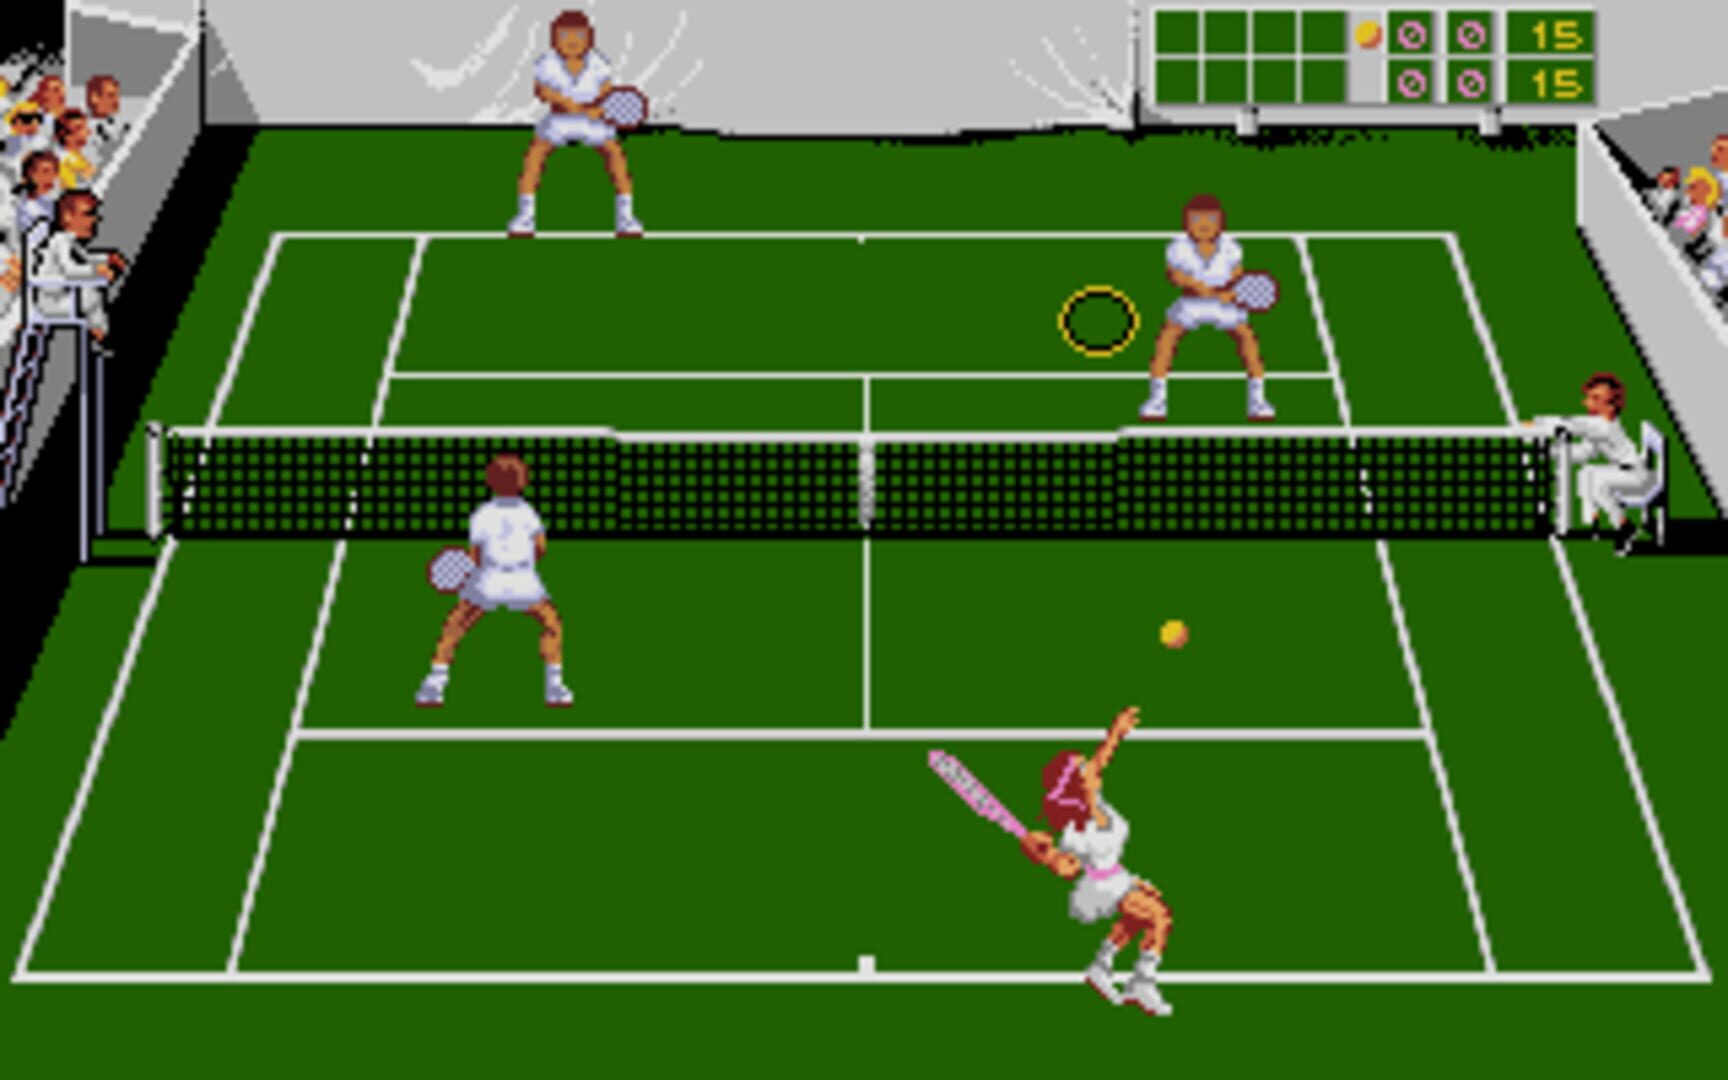 Jimmy Connors Pro Tennis Tour